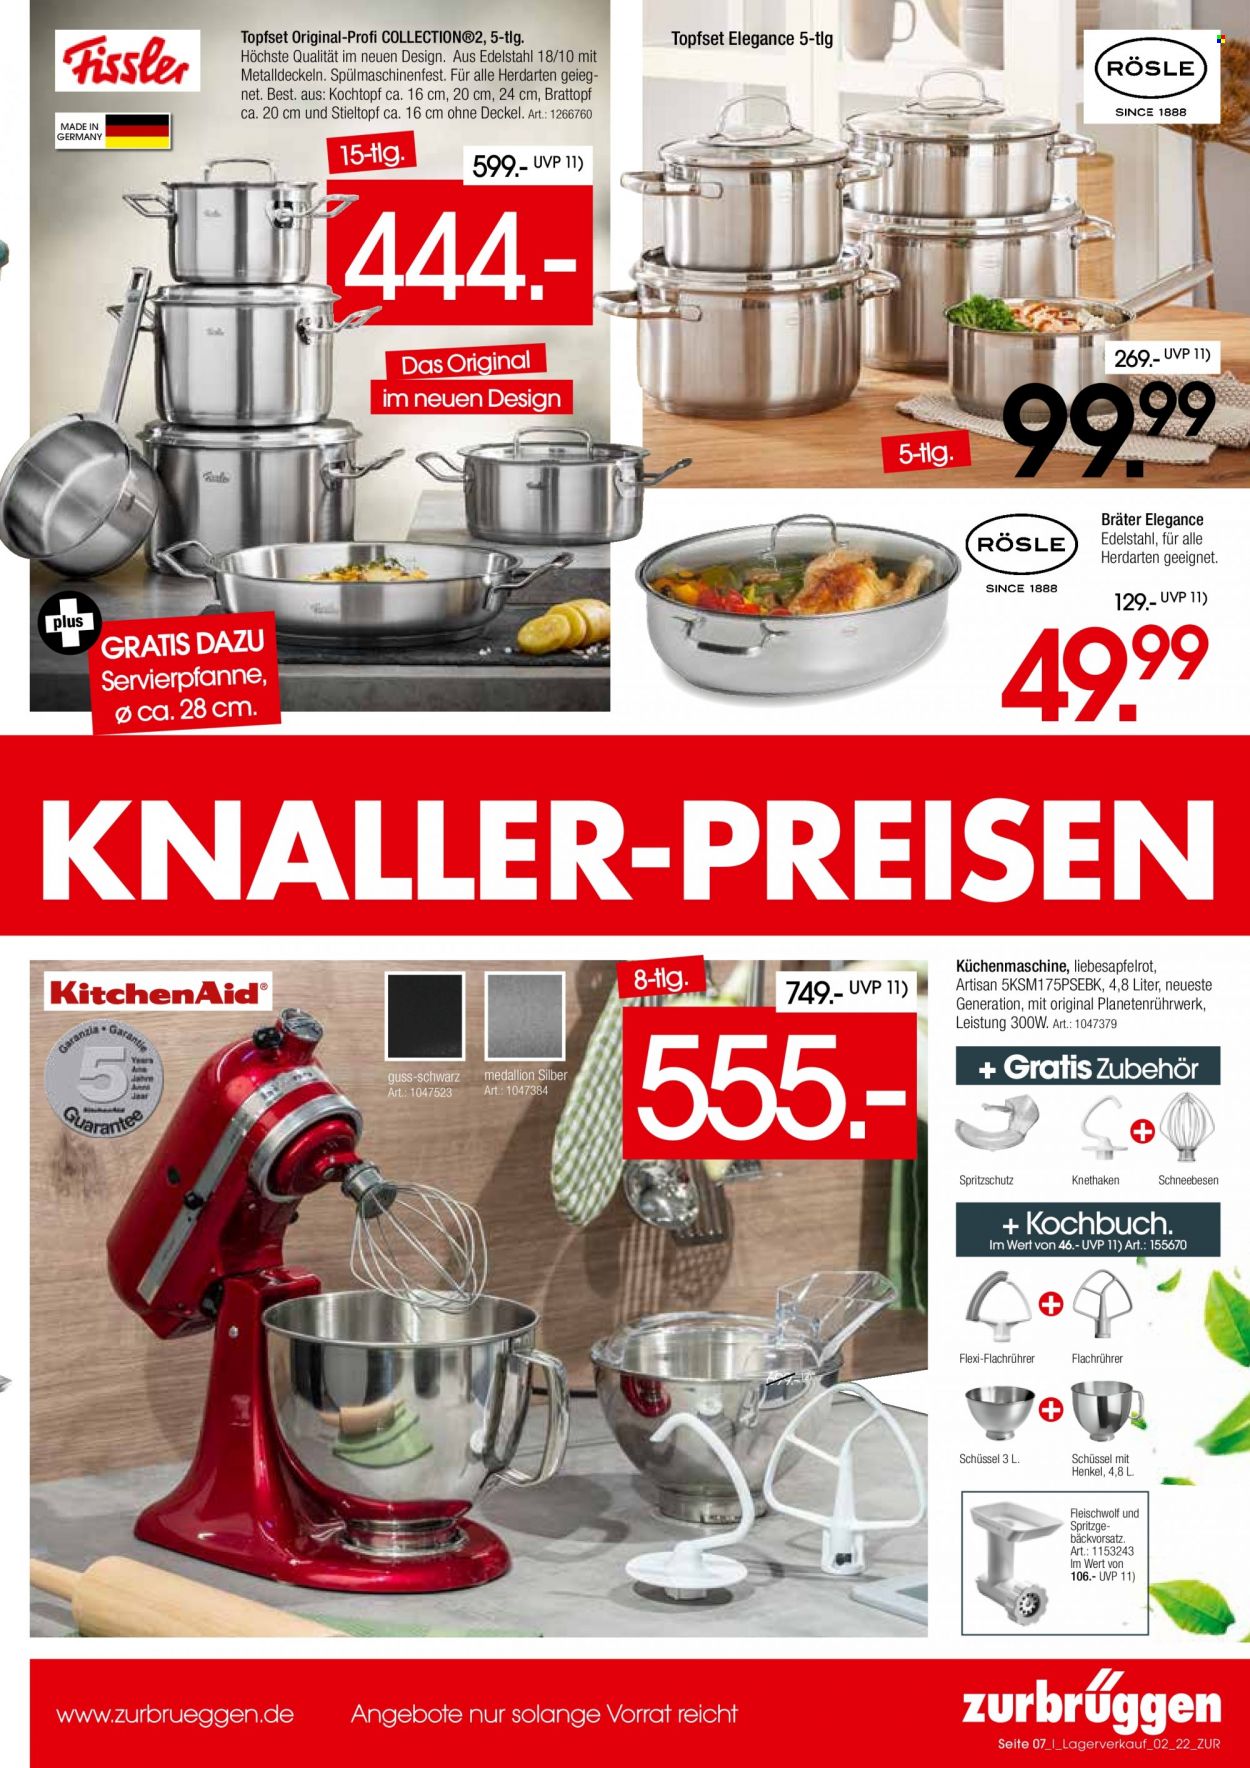 thumbnail - Prospekte Zurbrüggen - 31.03.2022 - 31.05.2022 - Produkte in Aktion - Topfset, Kochtopf, Küchenmaschine. Seite 7.